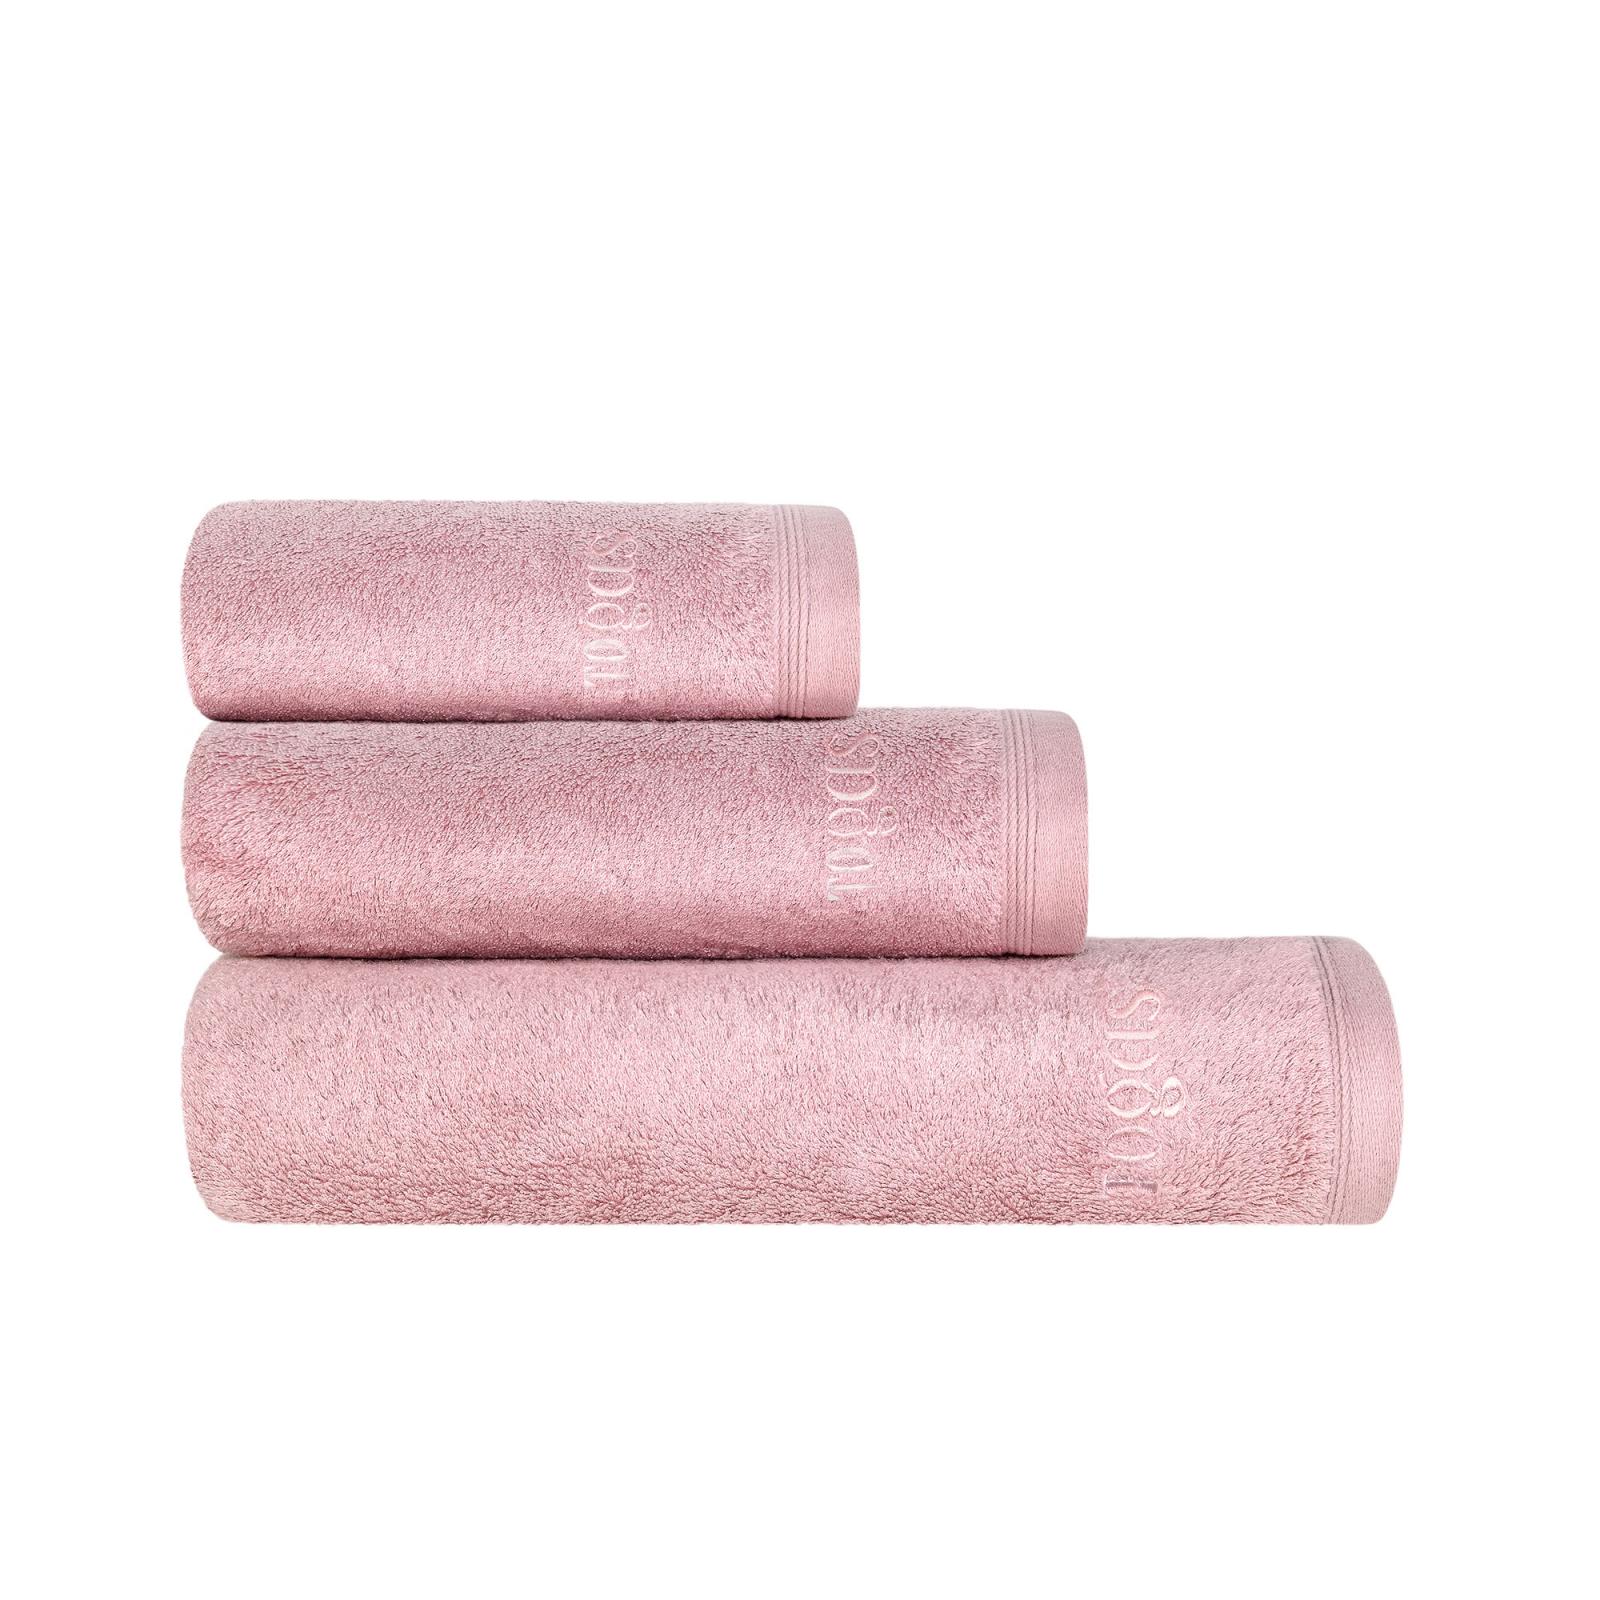 Полотенце 40х60 см Пуатье розовое Togas полотенце togas пуатье изумрудное 40х60 см